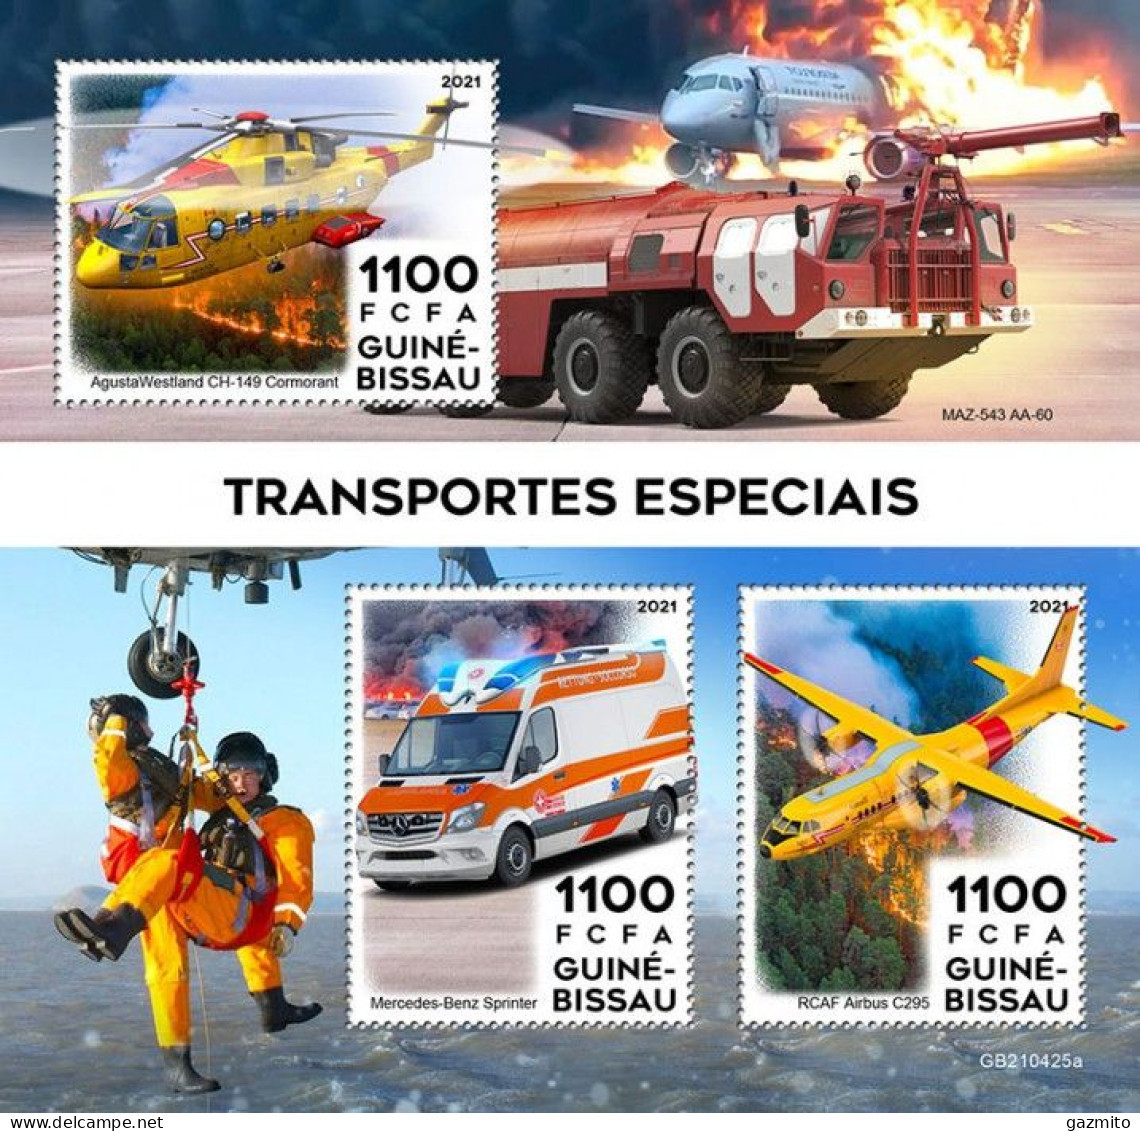 Guinea Bissau 2021, Transport, Helicopter, Plane, Fire Engine, Ambulance, 3val In BF - Guinea-Bissau